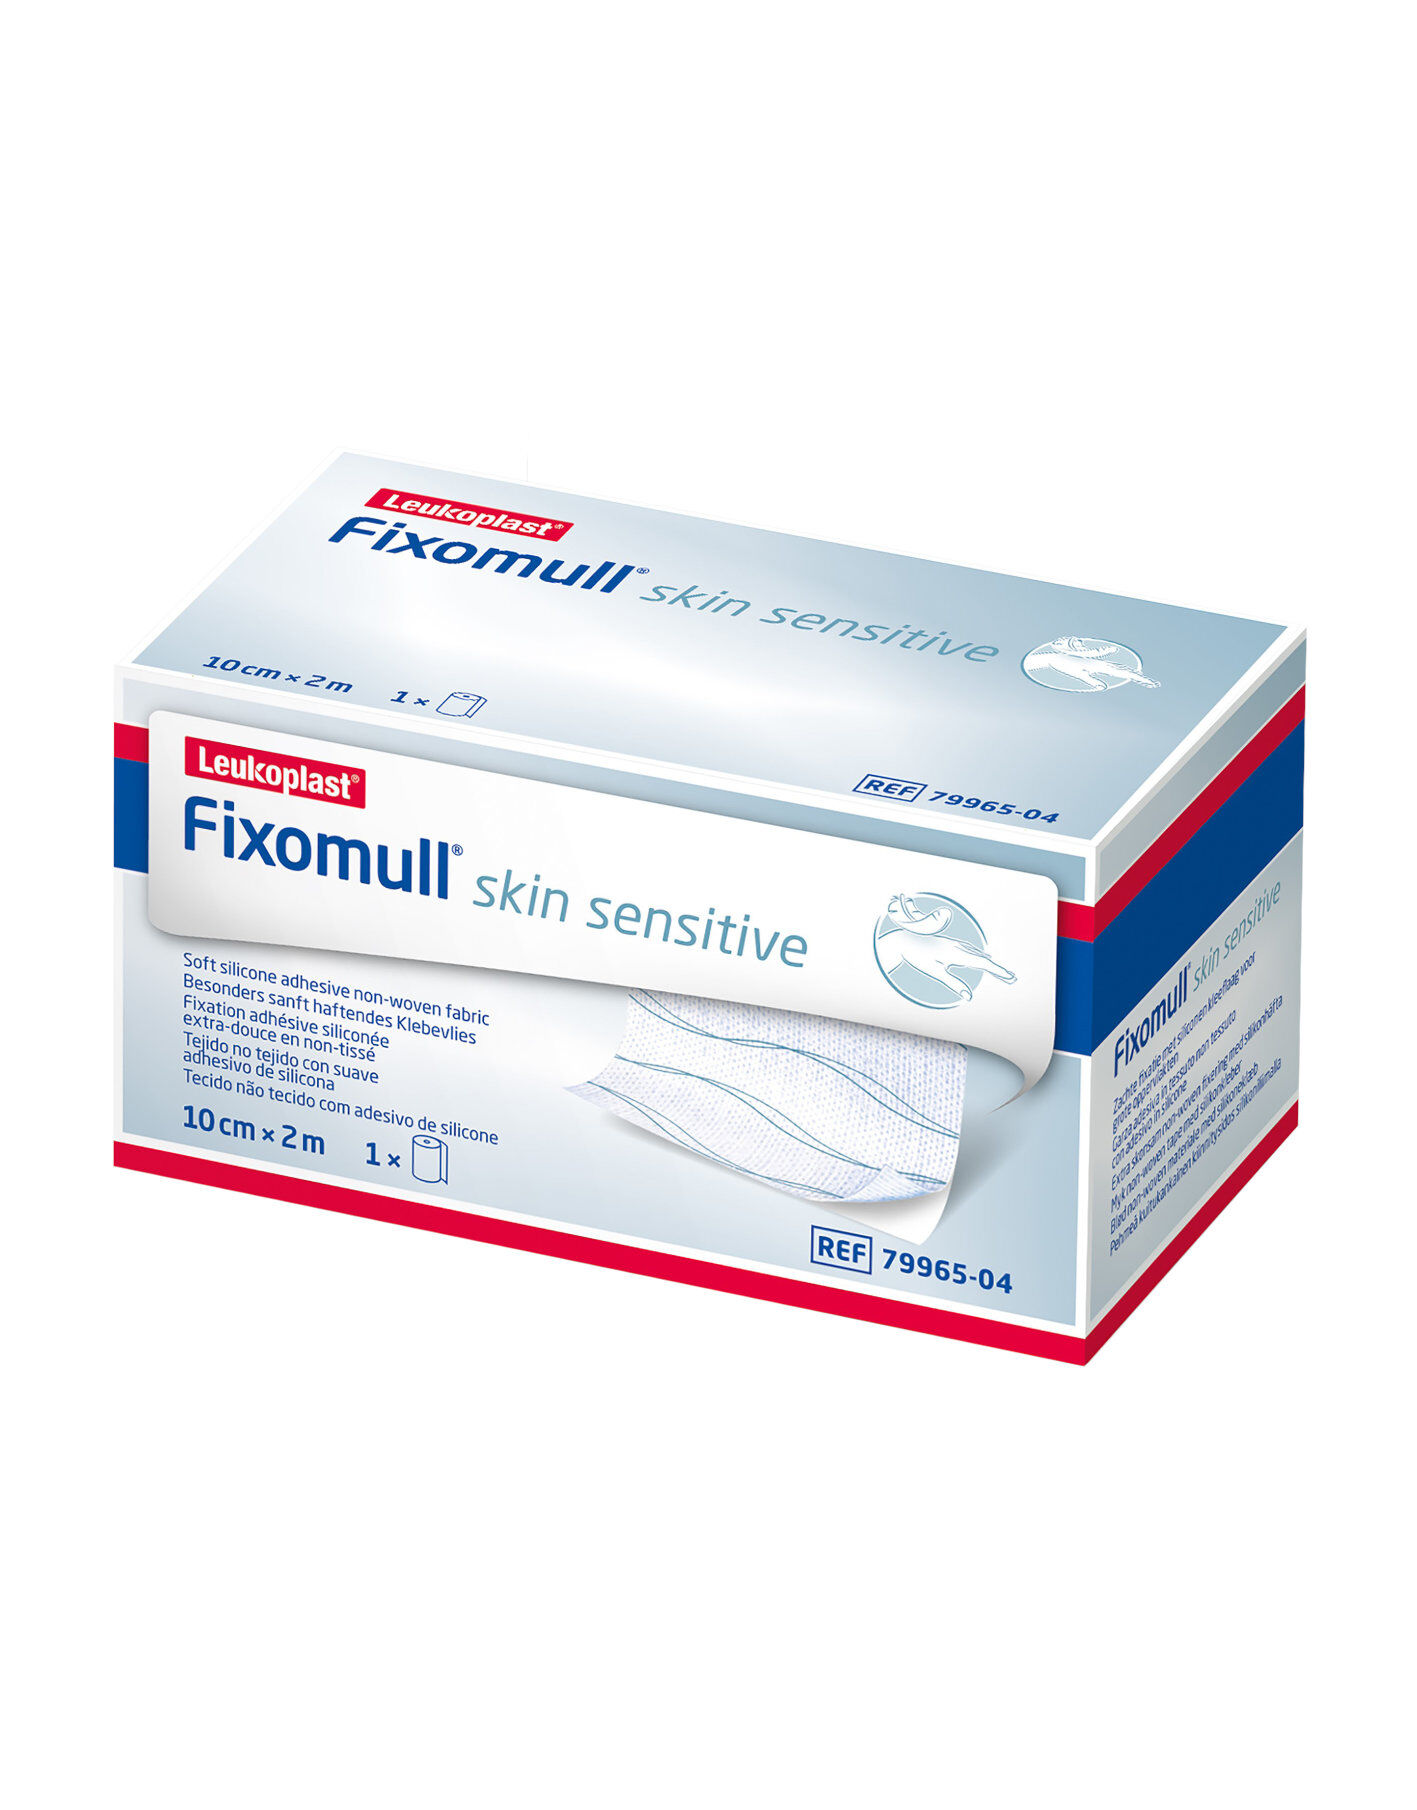 BSN MEDICAL Leukoplast - Fixomull Skin Sensitive 1 Benda